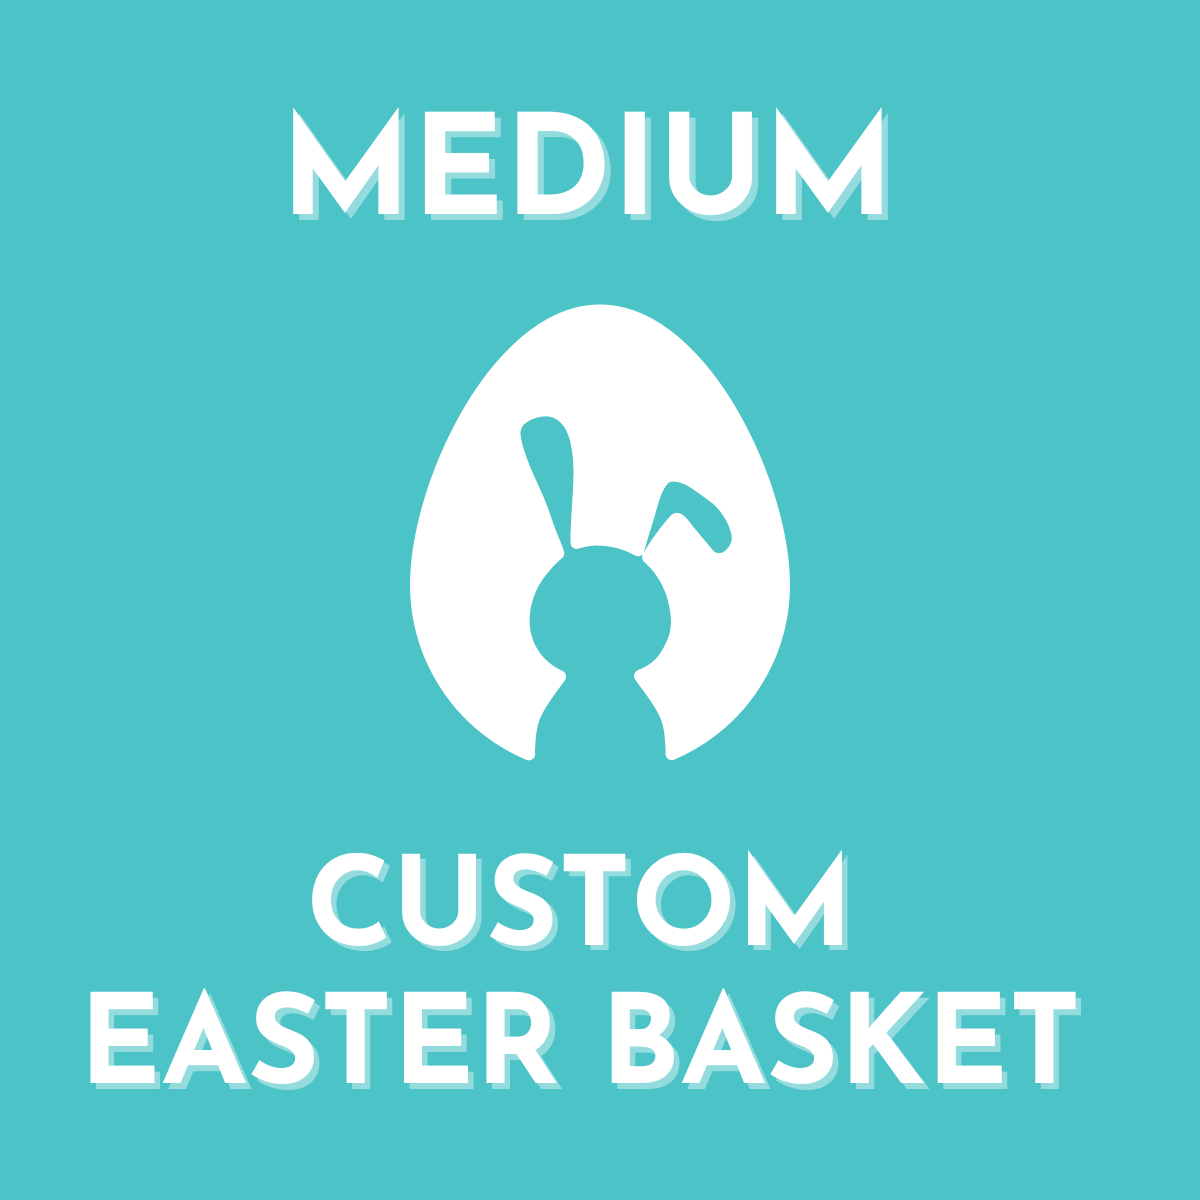 Medium Custom Easter Basket $50